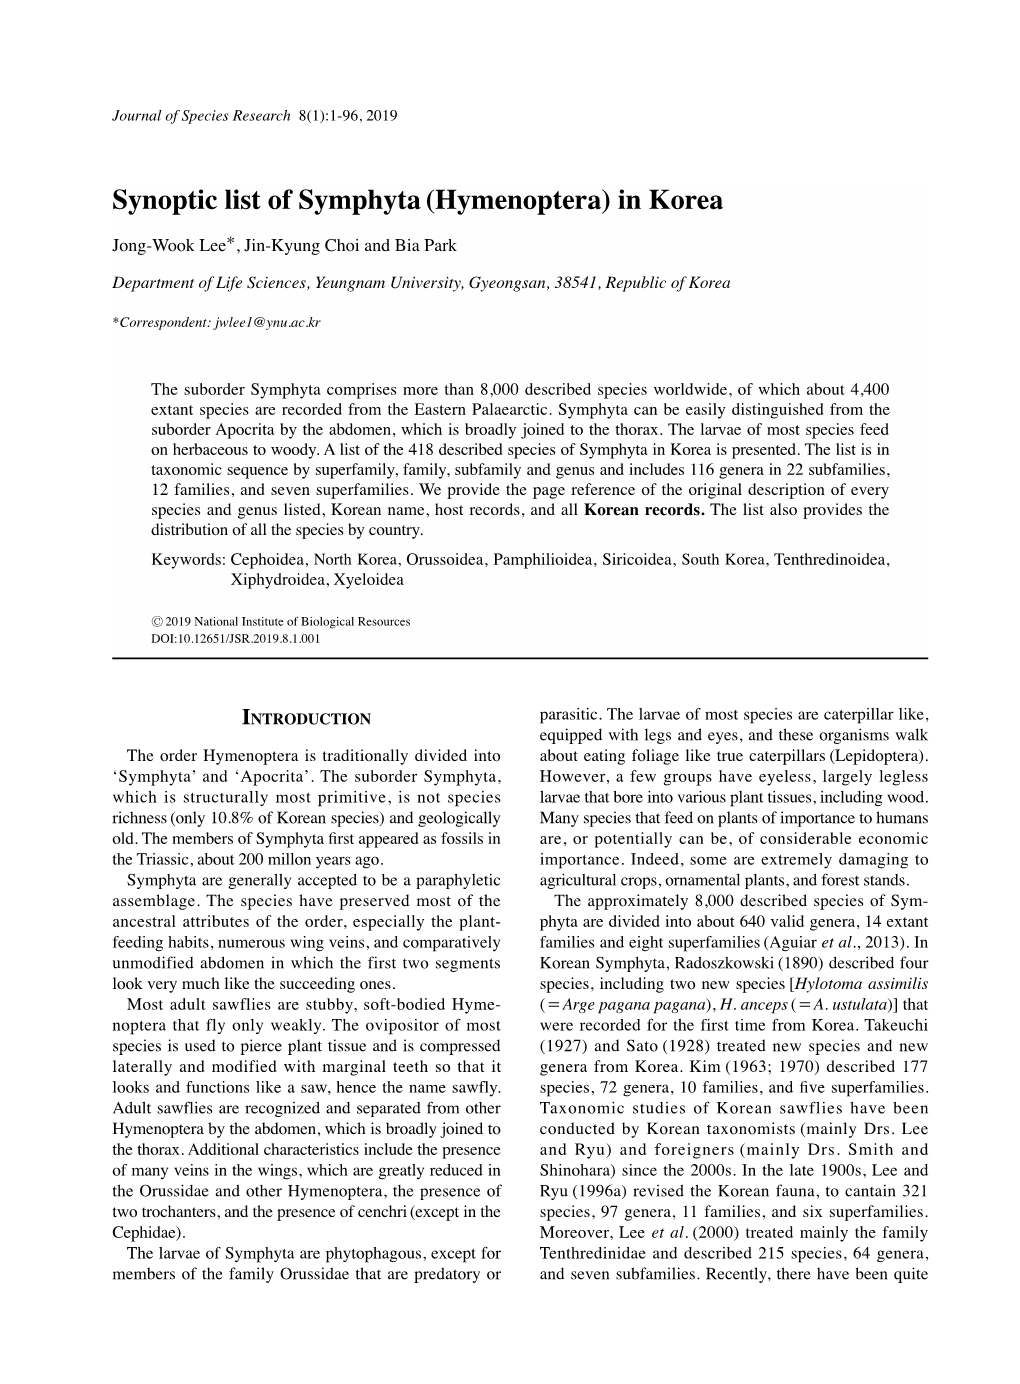 Synoptic List of Symphyta(Hymenoptera) in Korea